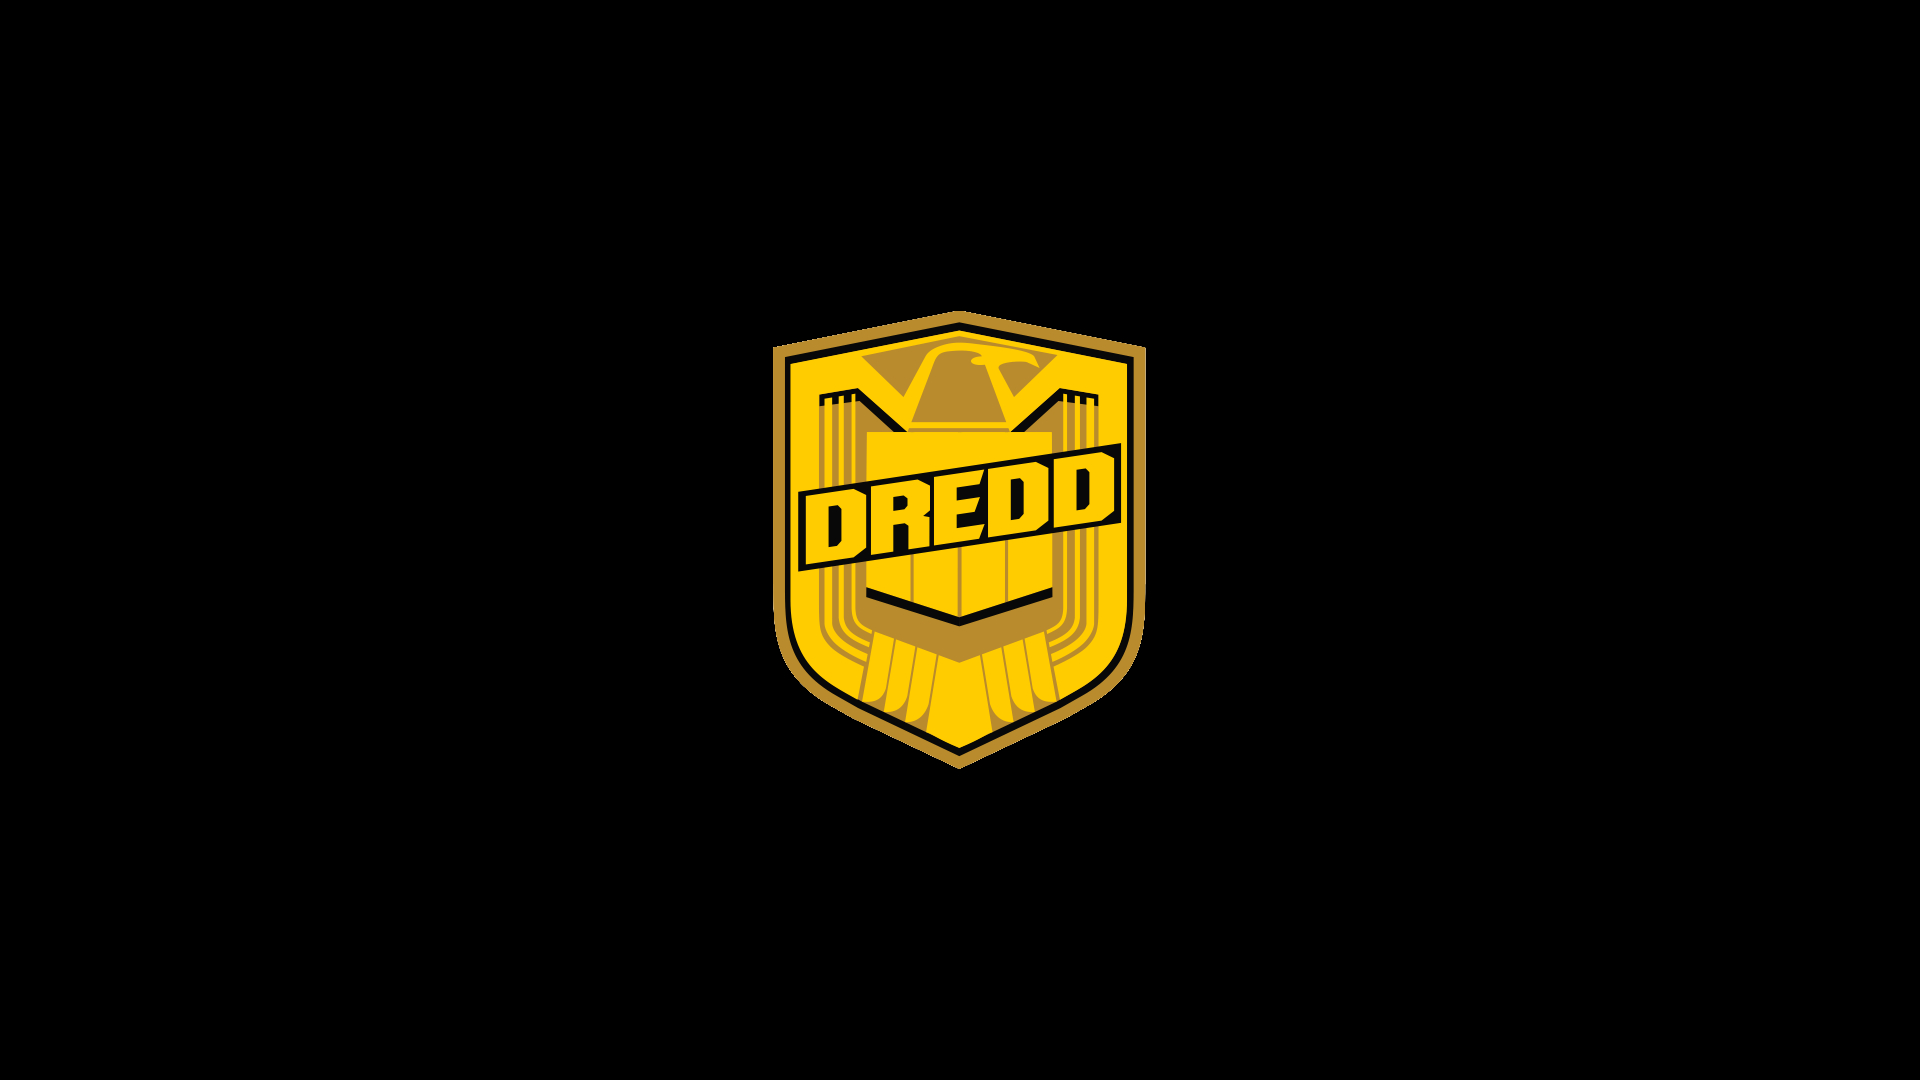 Judge Dredd Badge Full HD Wallpaper And Background